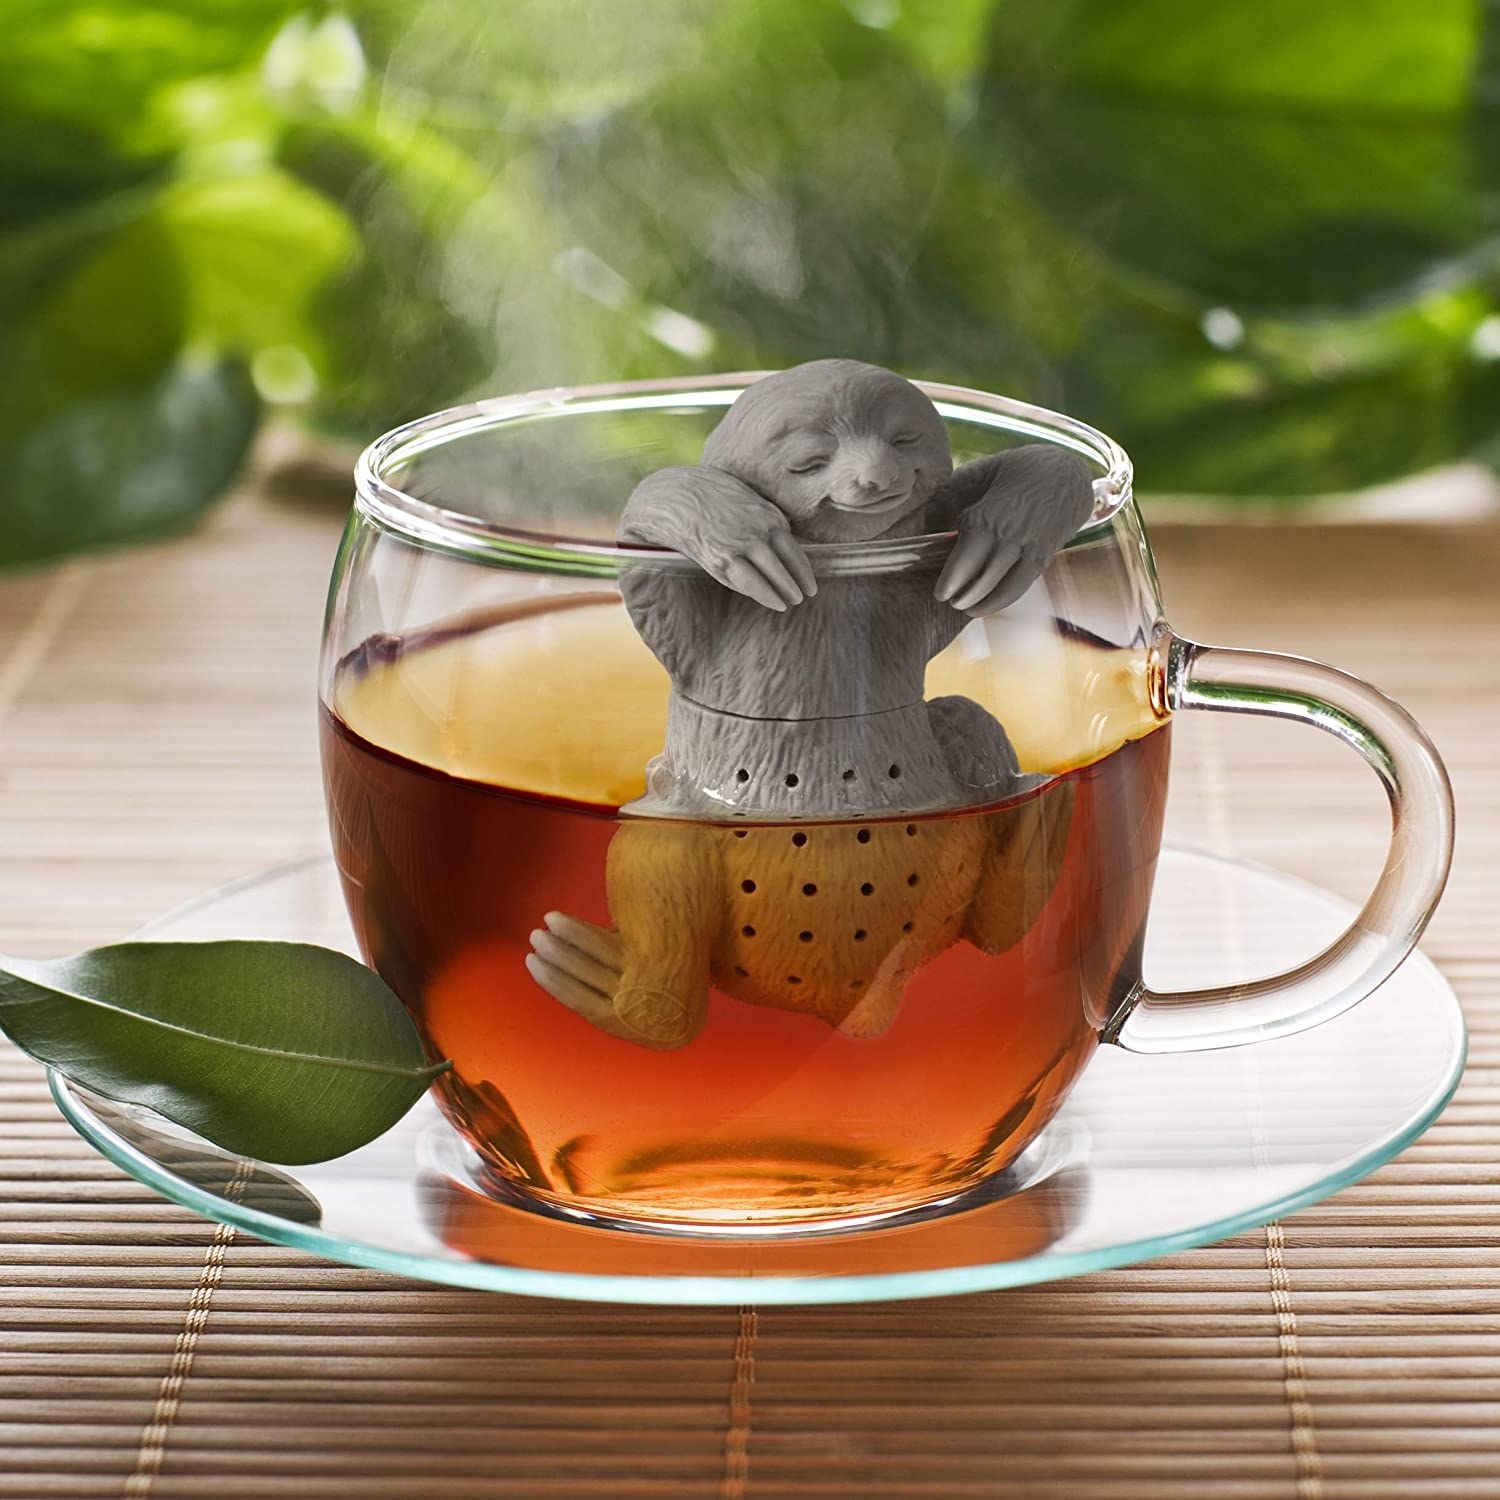 Sloth tea diffuser in a glass mug